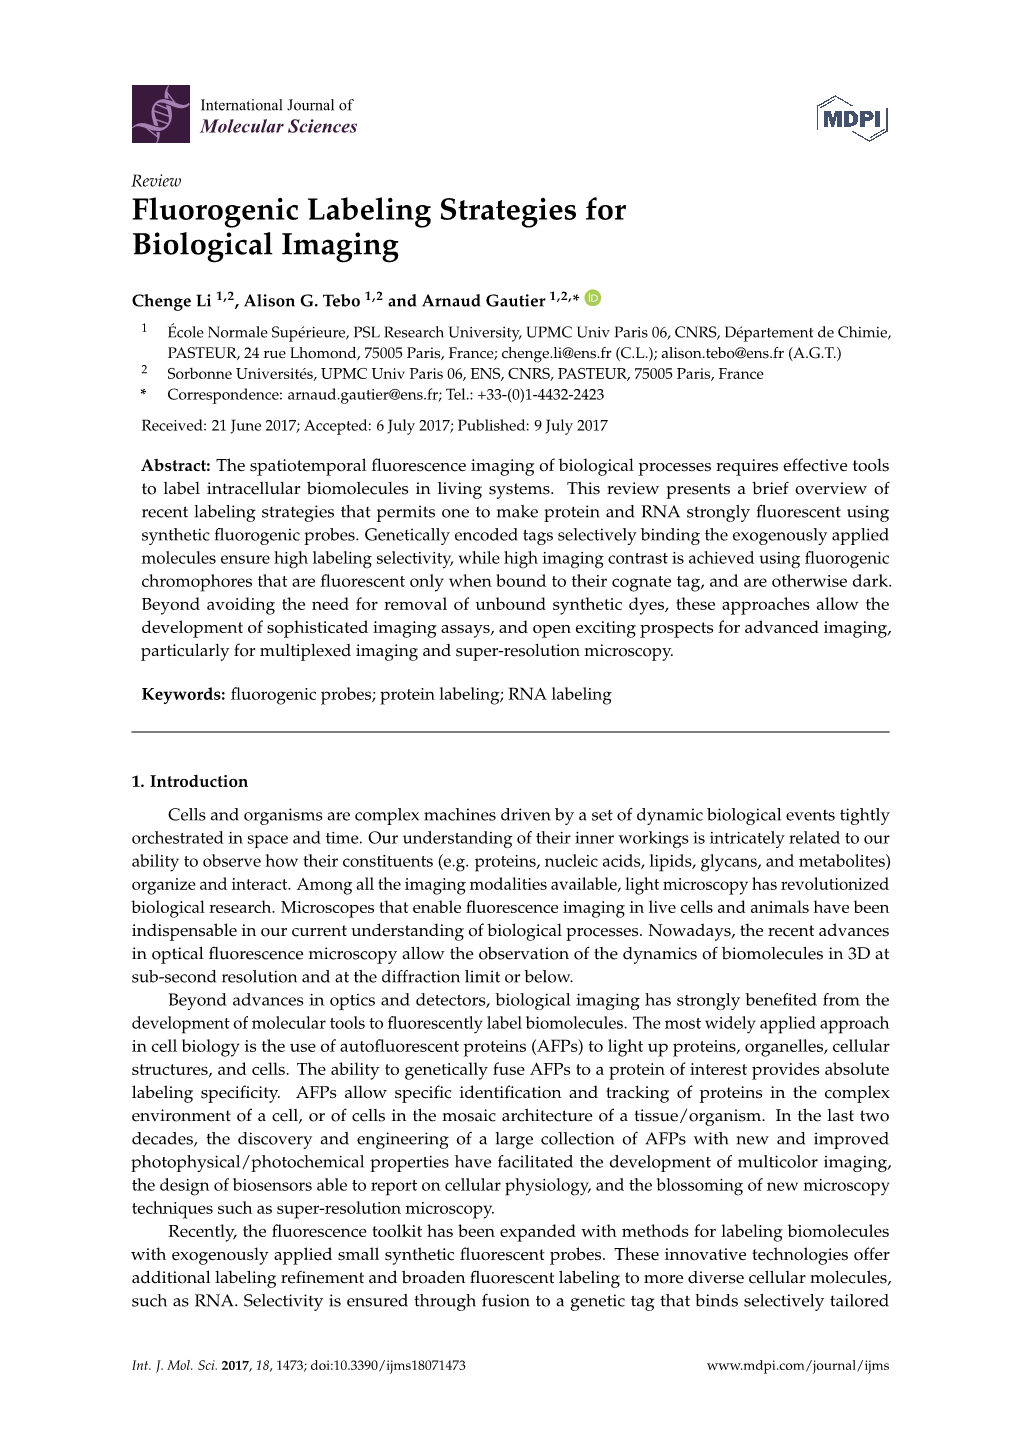 Fluorogenic Labeling Strategies for Biological Imaging